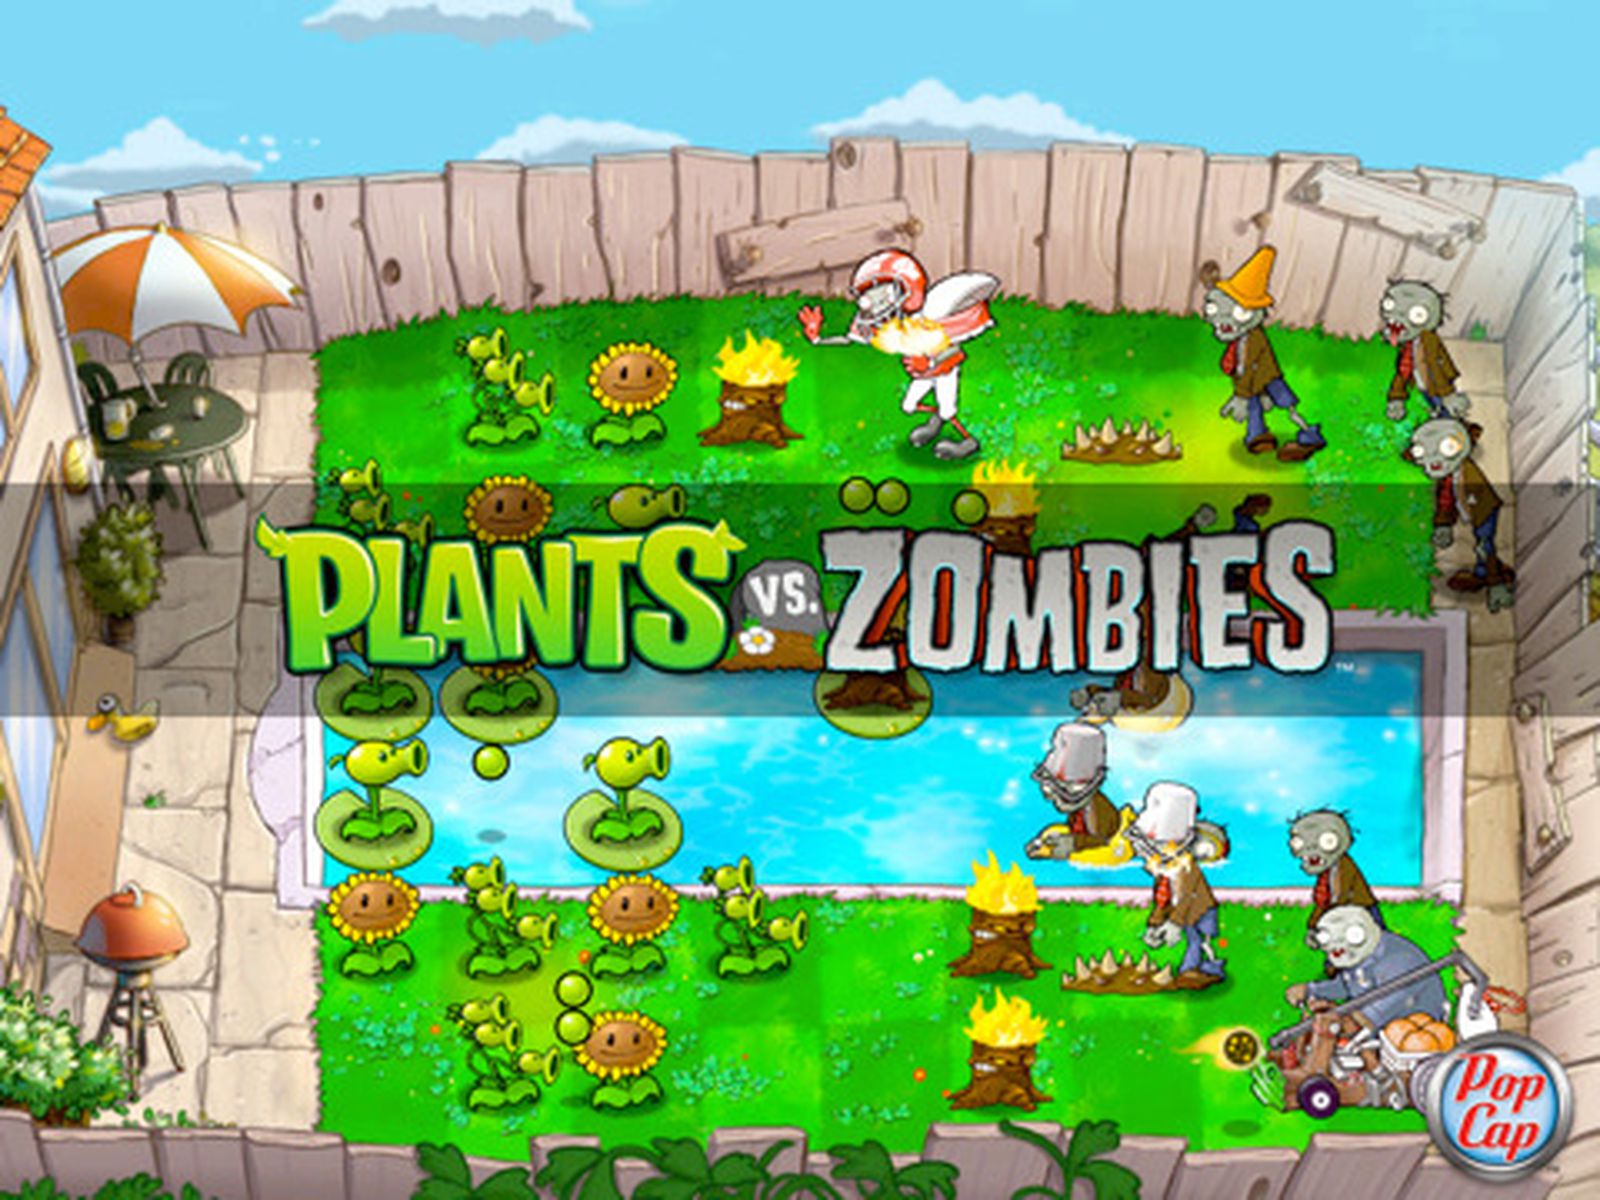 Plants vs Zombies 2' Update Brings PVP Mode